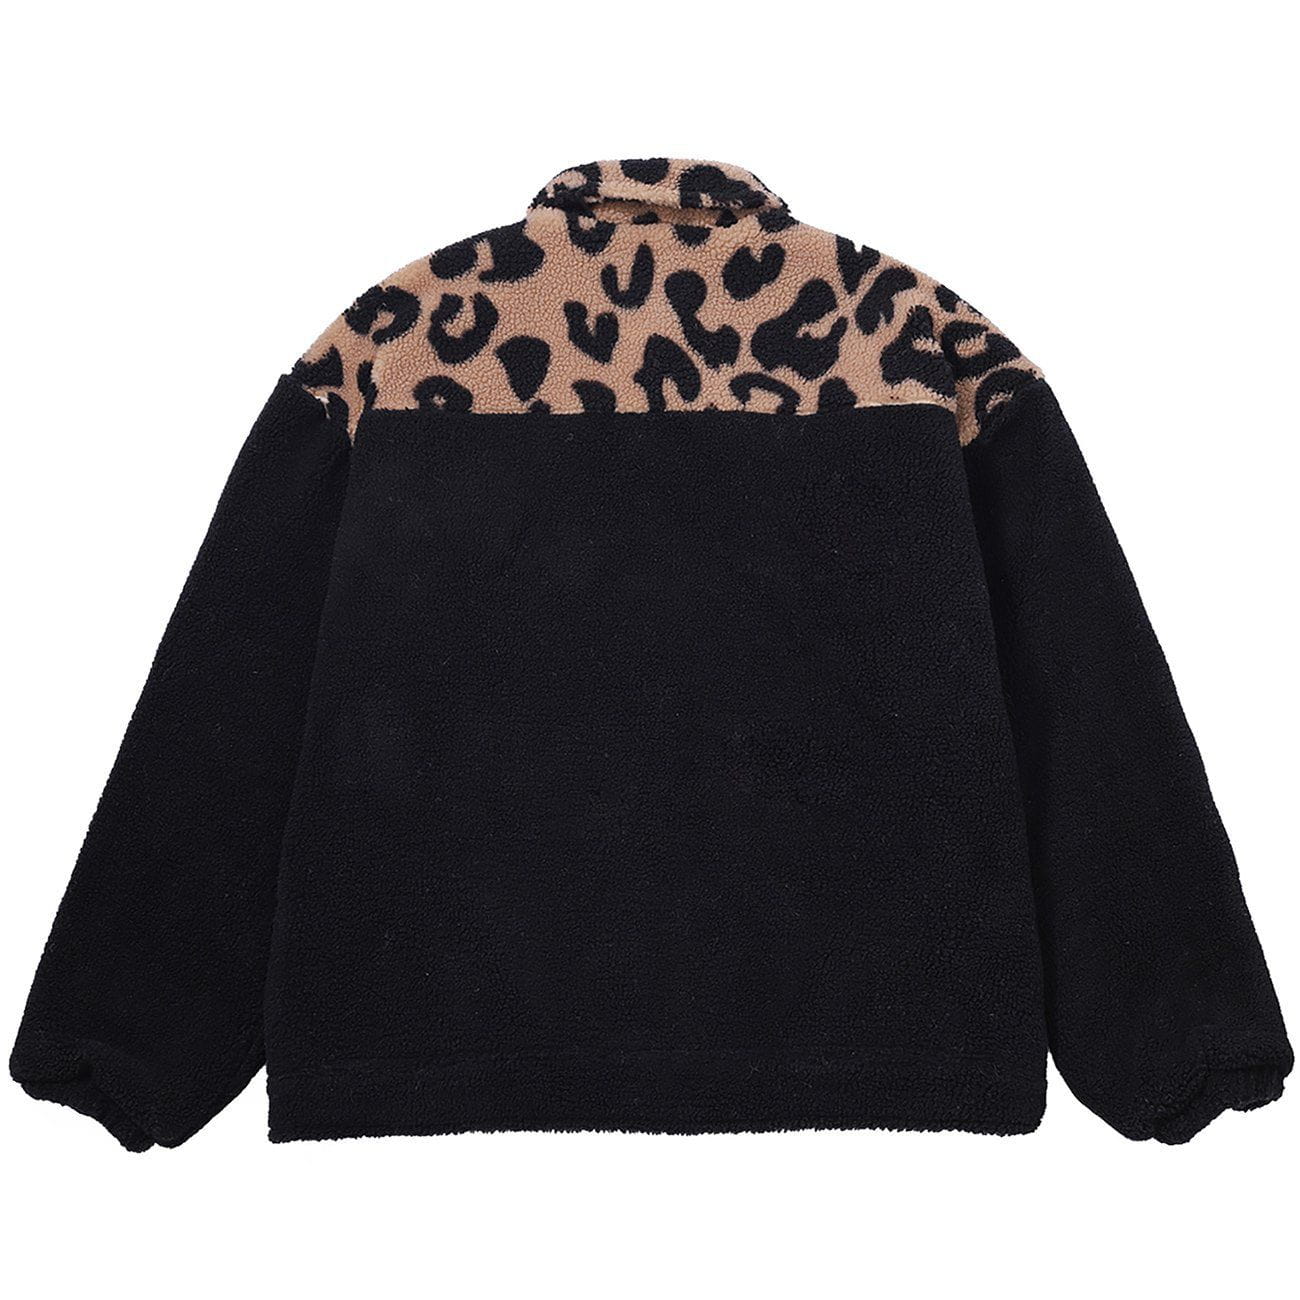 Sneakerland™ - Stitched Leopard Sherpa Winter Coat